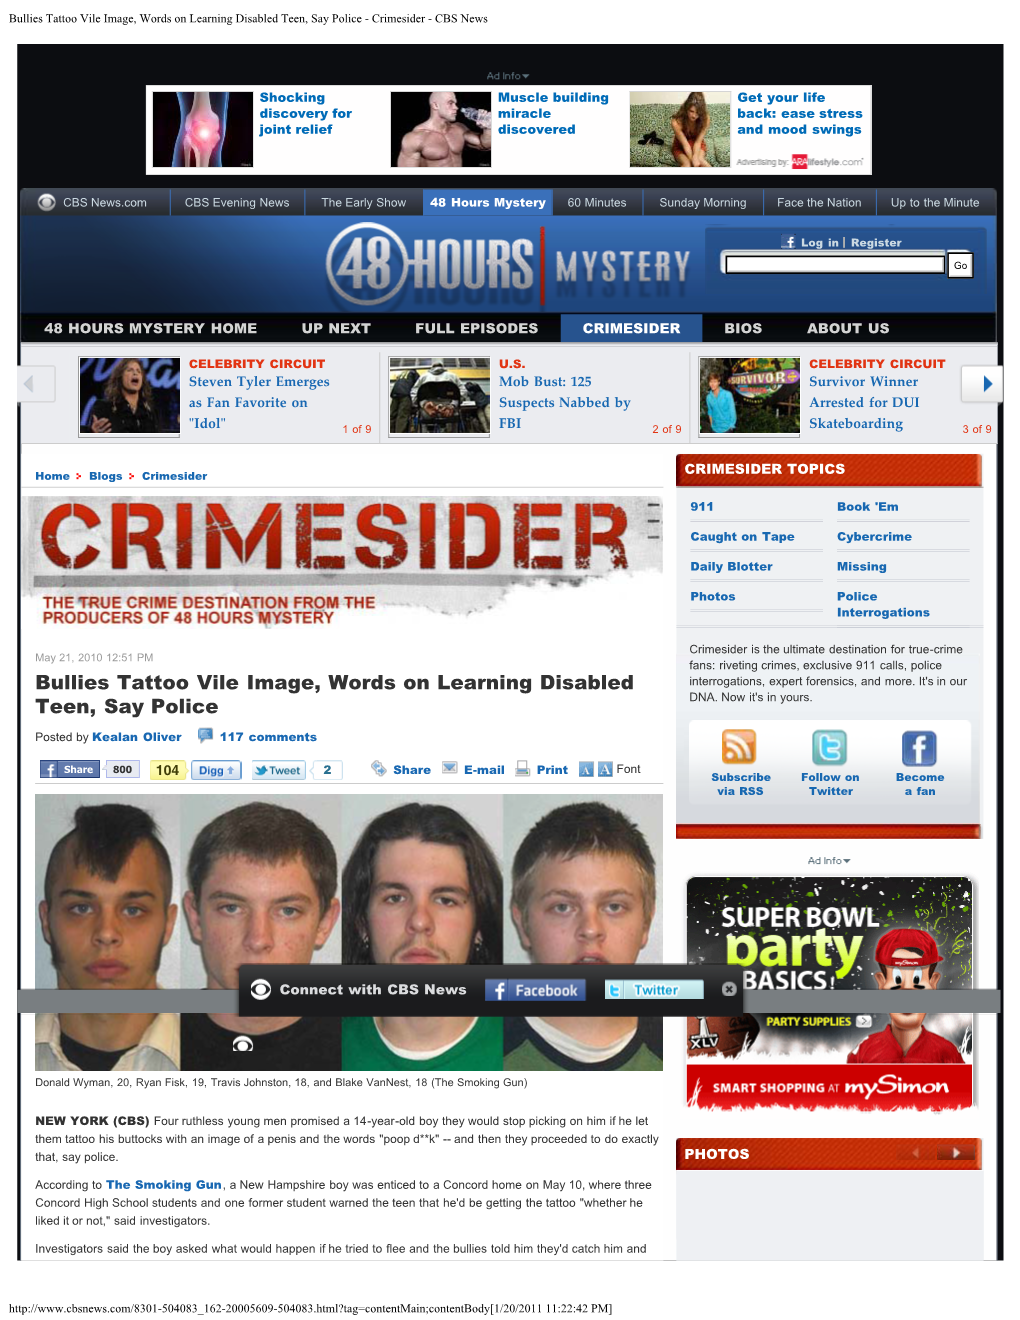 Crimesider - CBS News